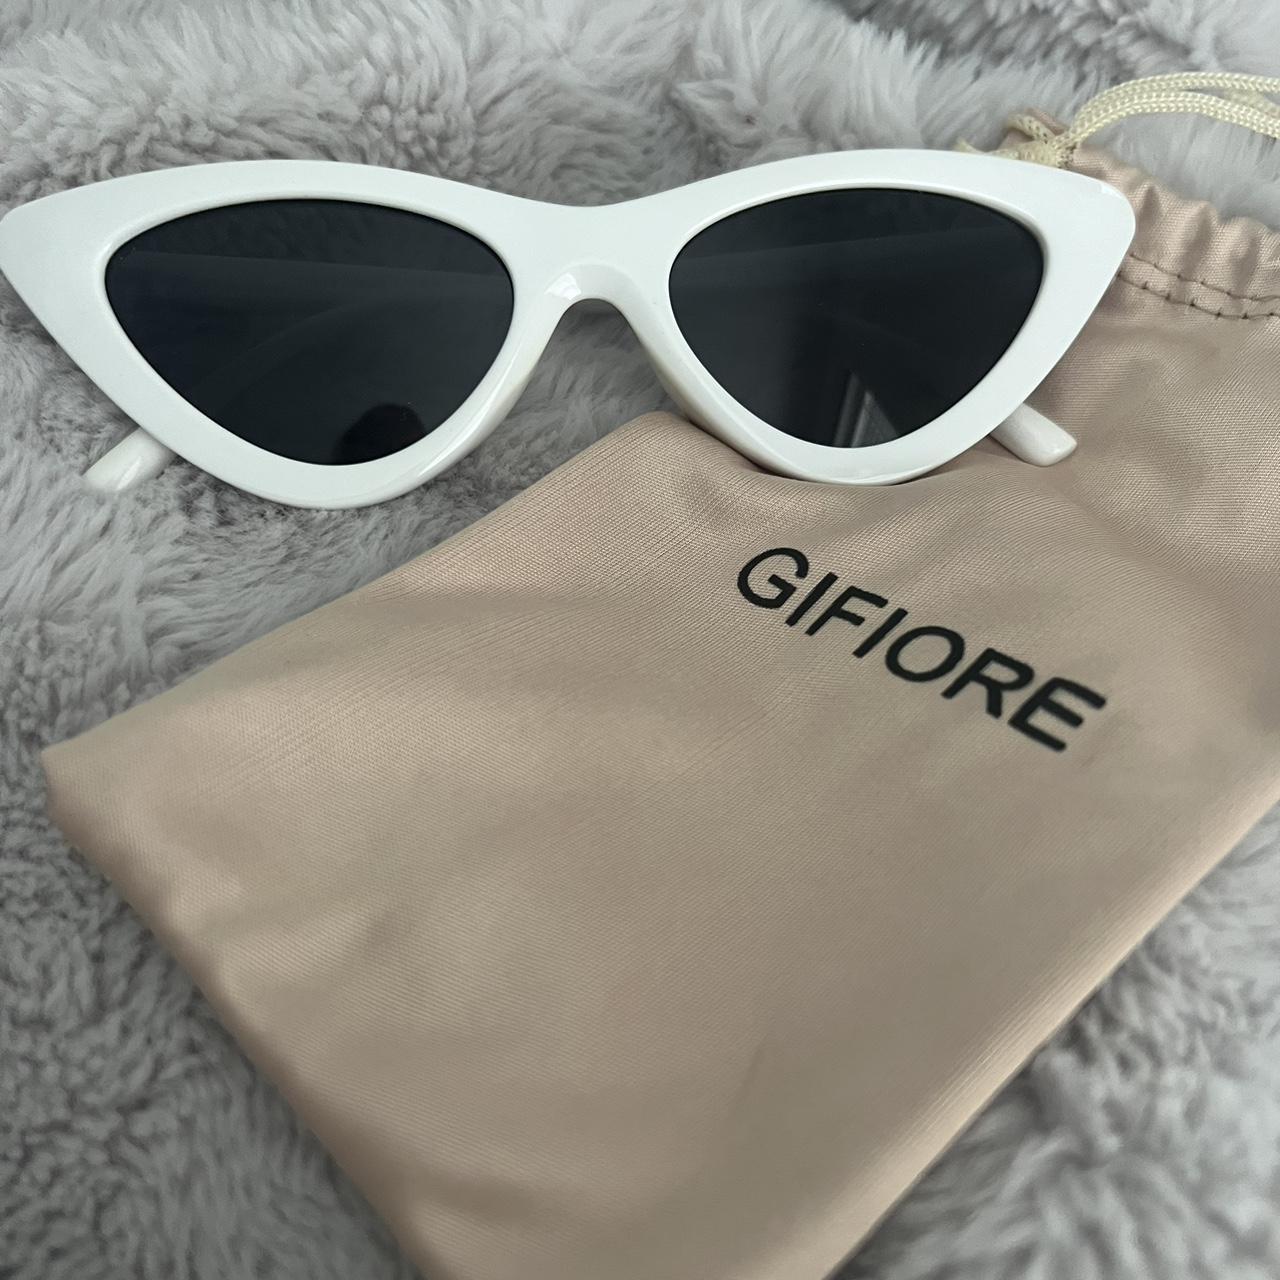 Gifiore Women's Retro Vintage Cat Eye Sunglasses